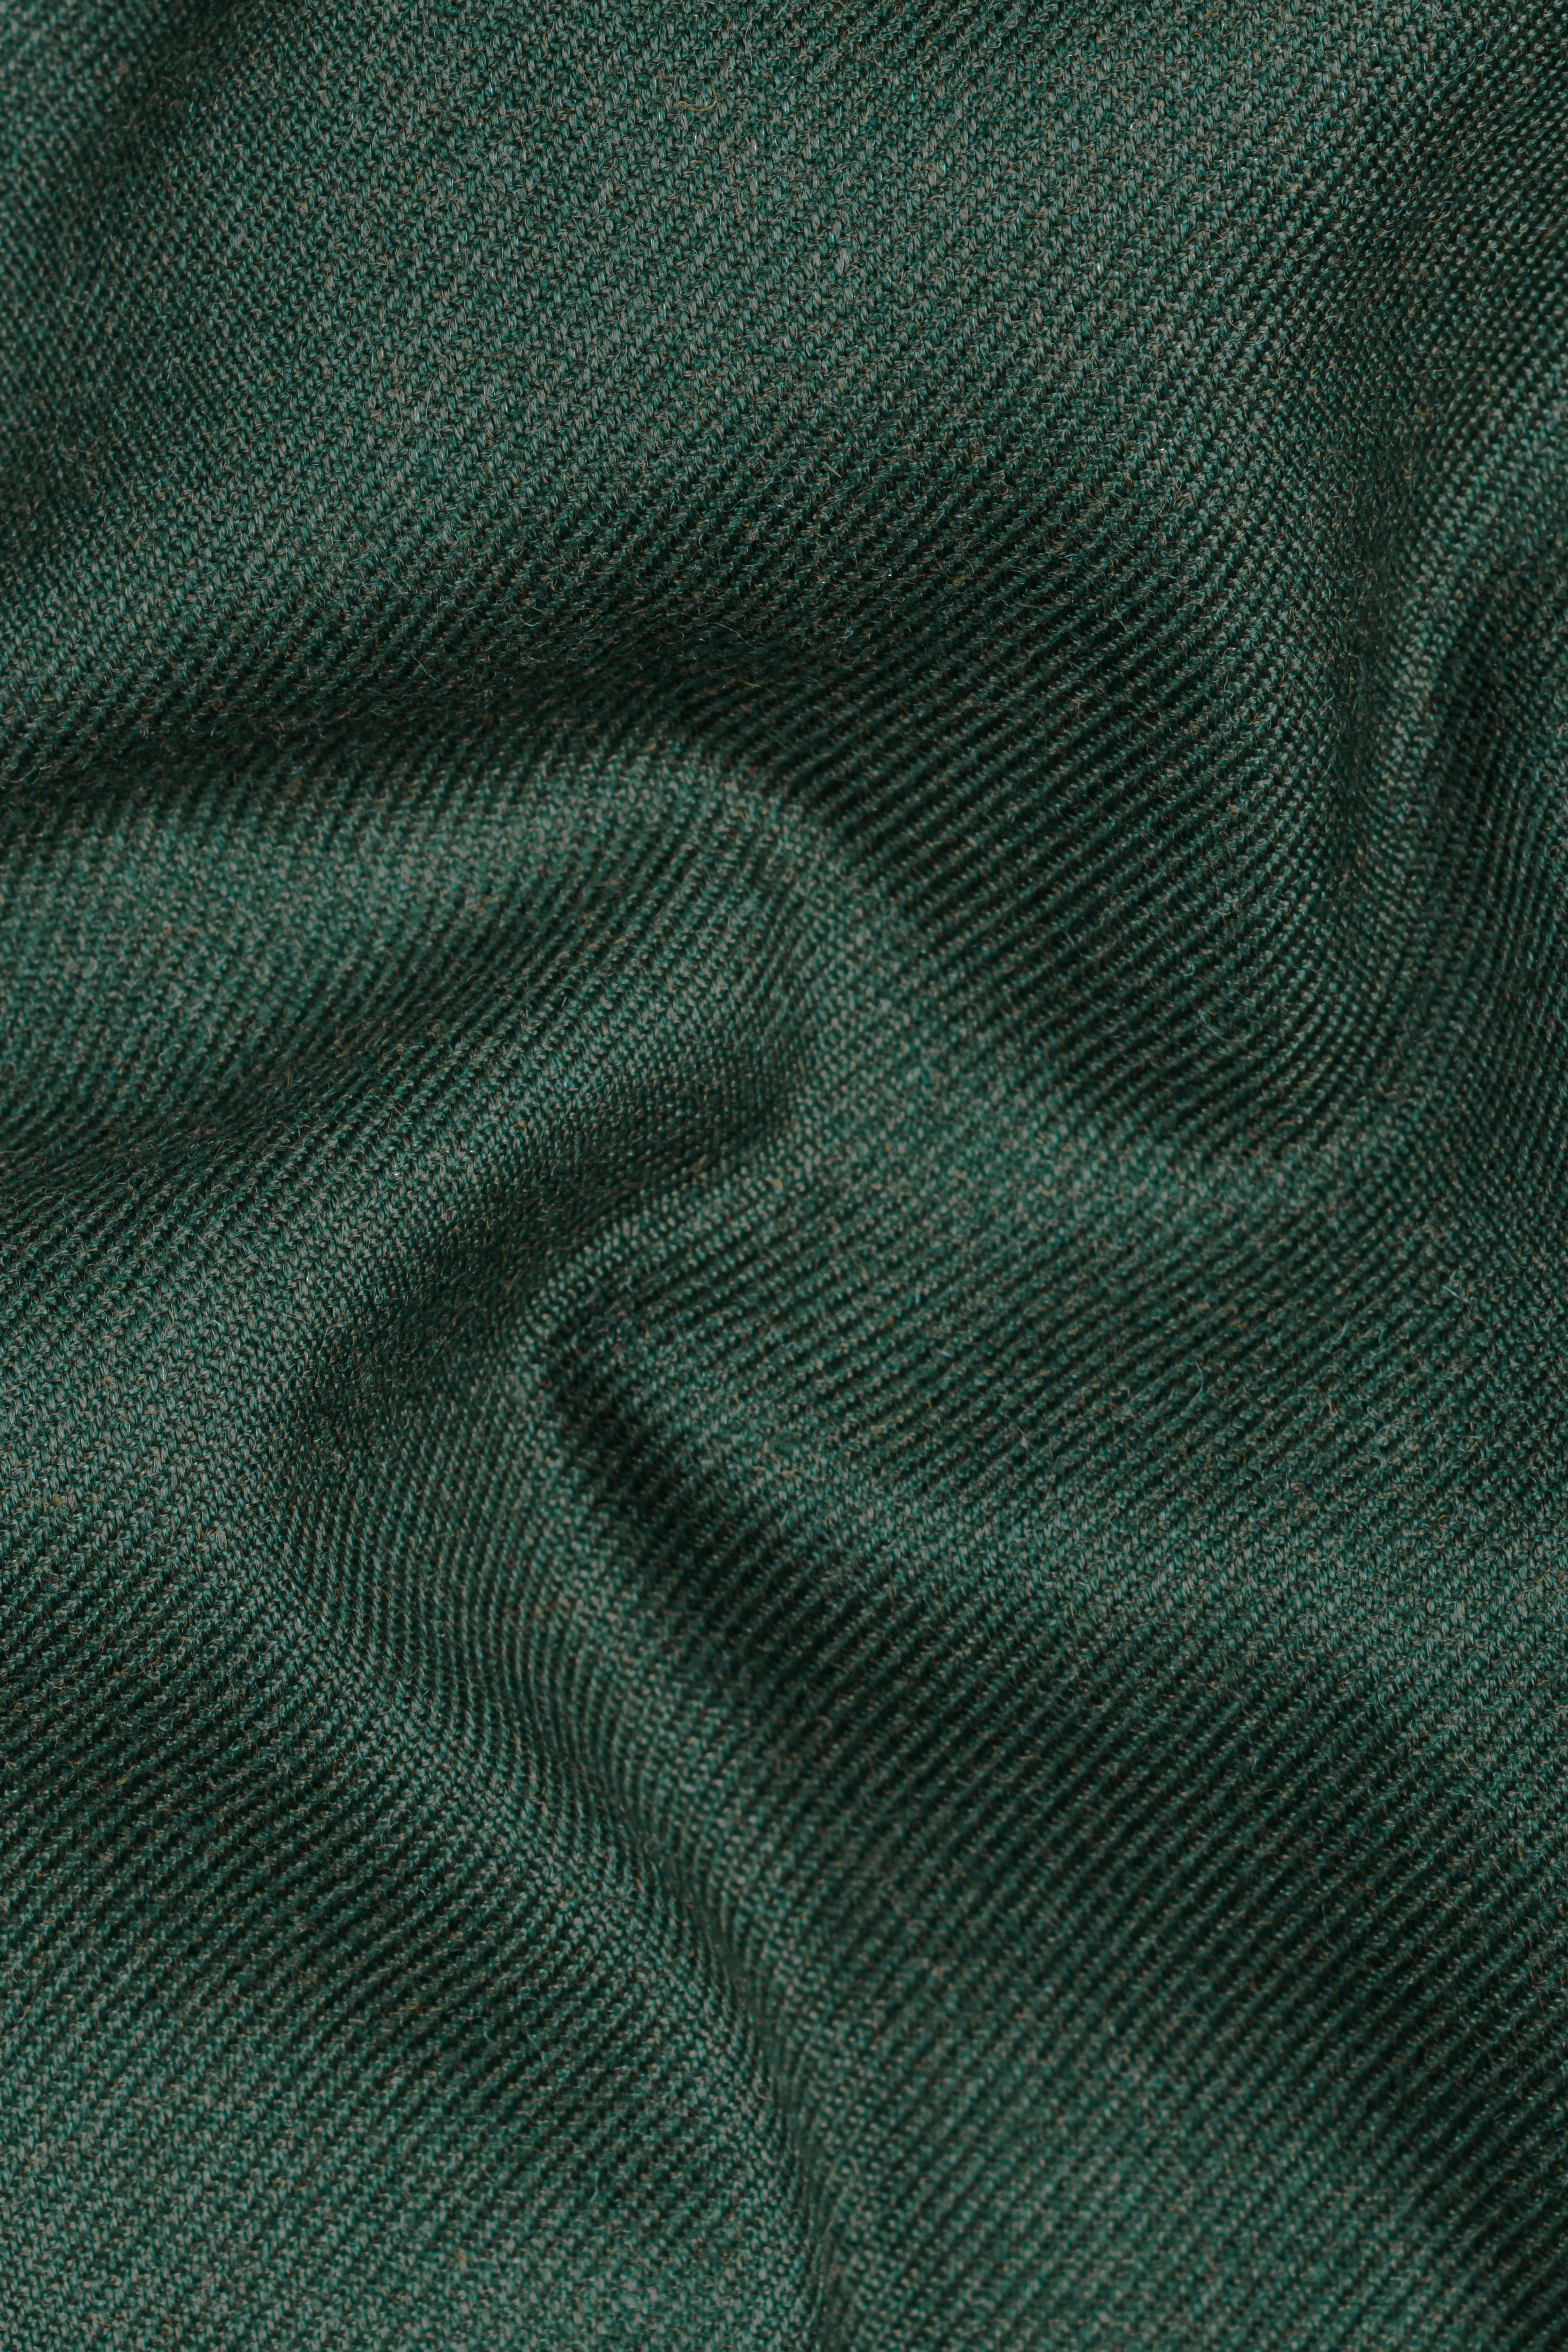 Plantation Green Premium Wool Rice Nehru Jacket